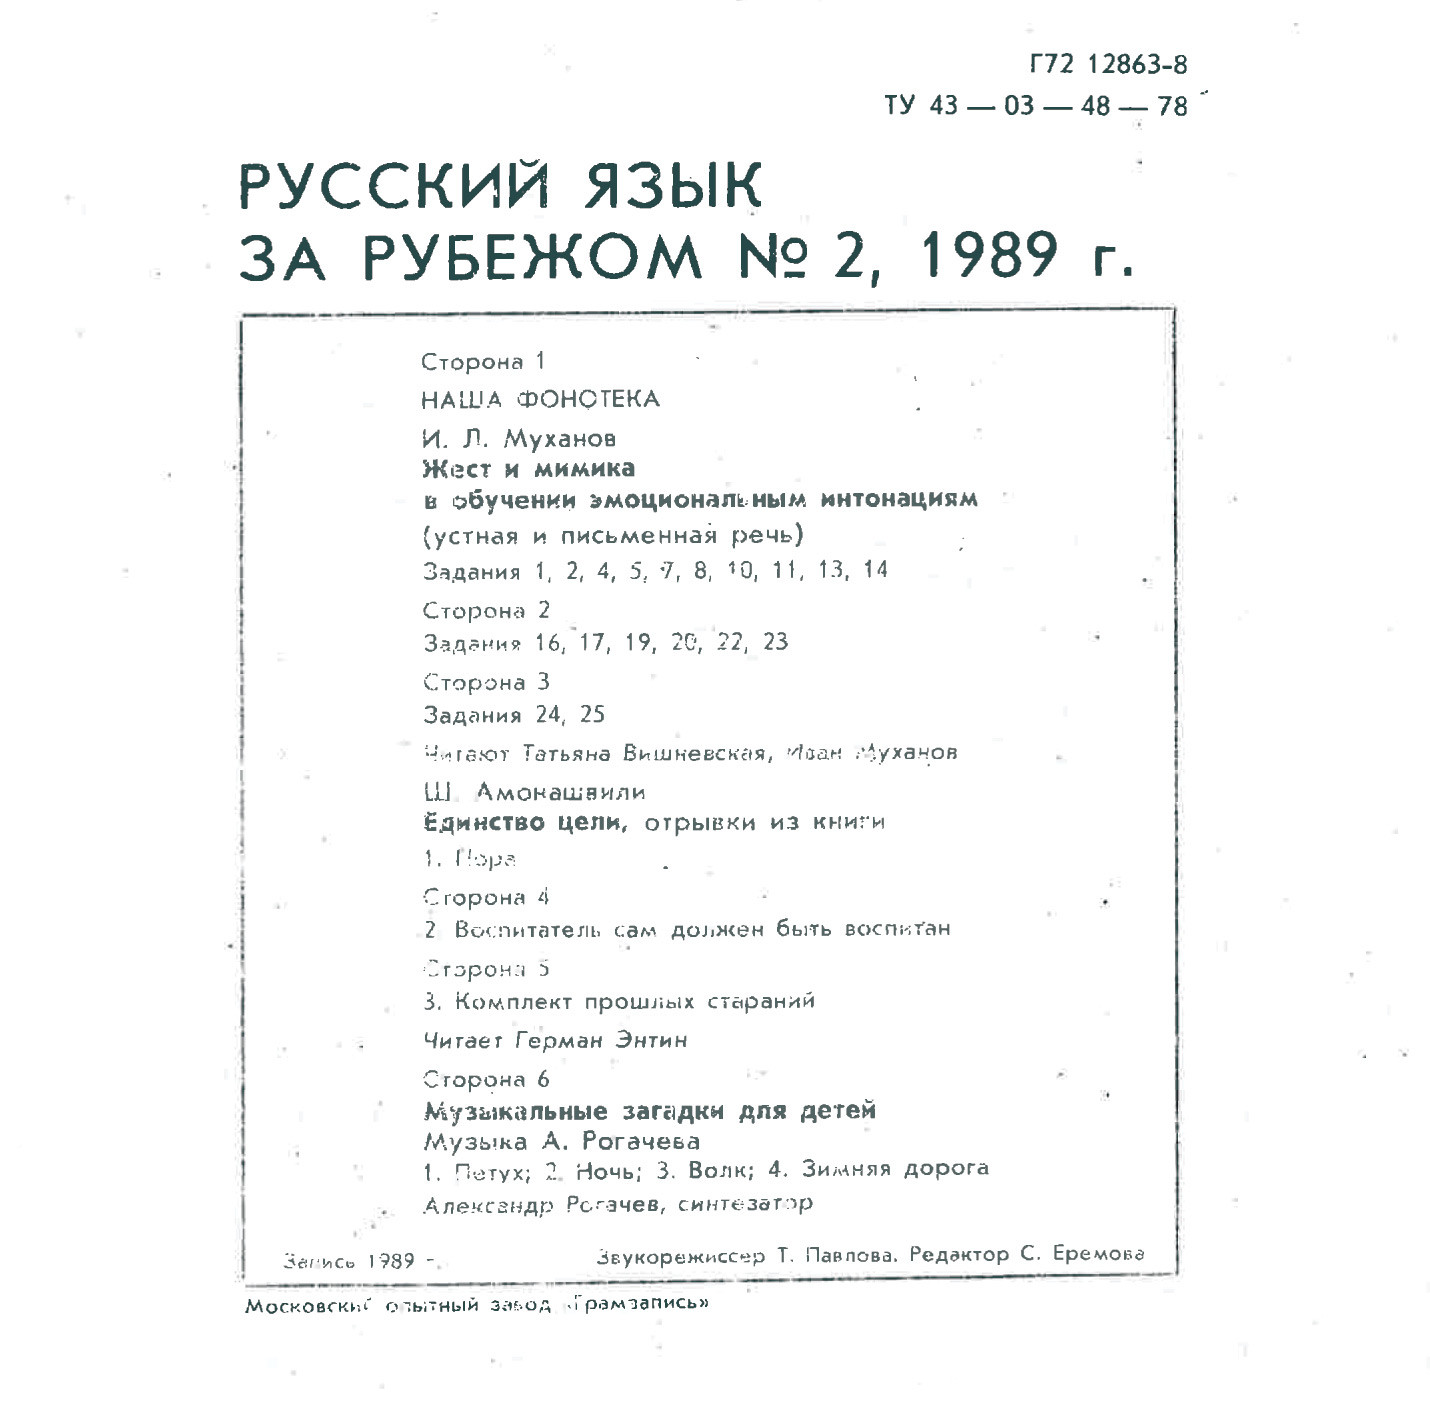 "РУССКИЙ ЯЗЫК ЗА РУБЕЖОМ", № 2 - 1989